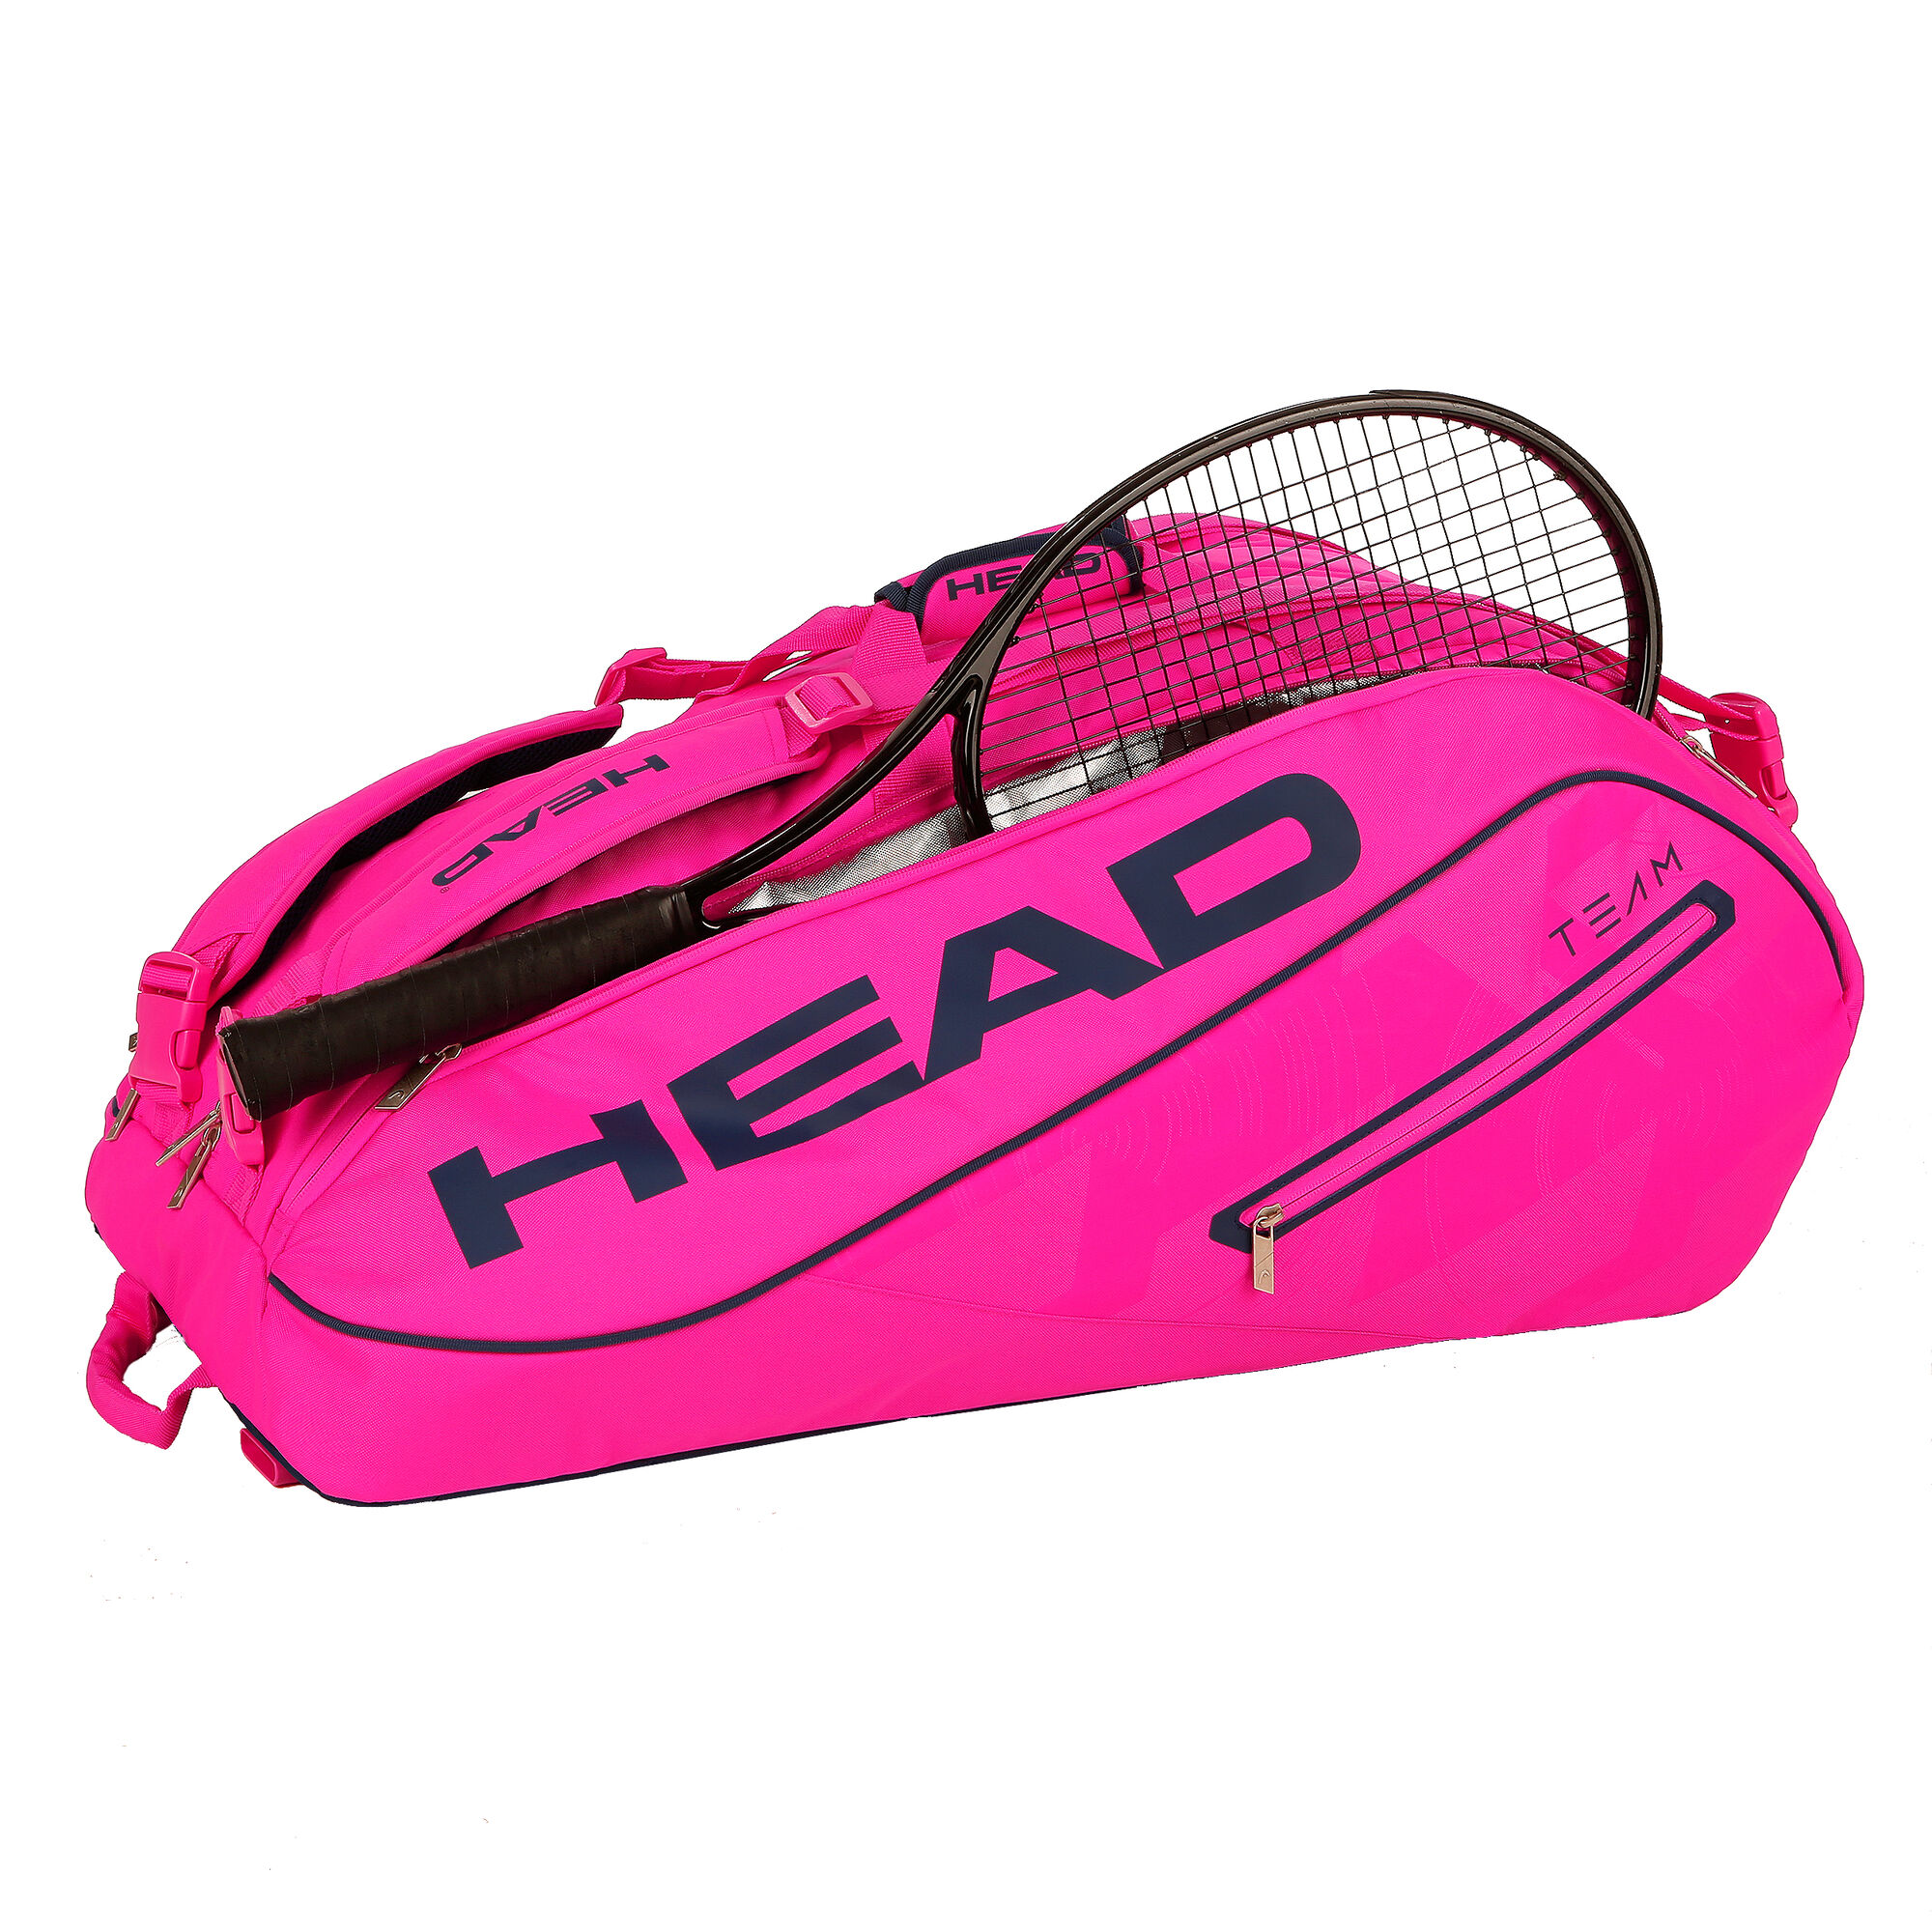 Team 12R Monstercombi Racket Bag Special Edition - Pink, Dark Blue